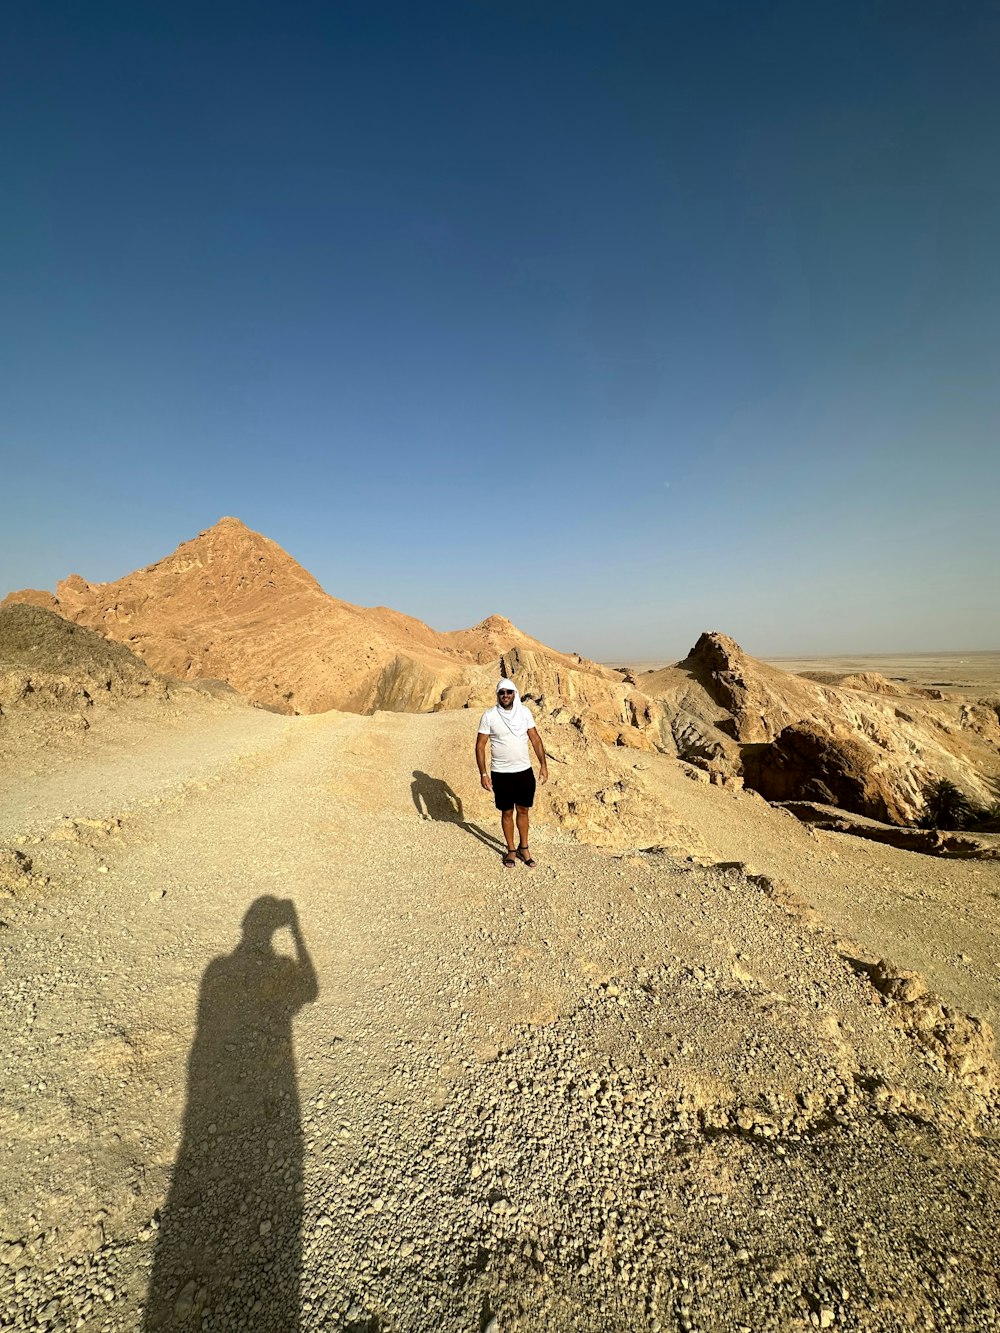 a man walking down a dirt road in the desert